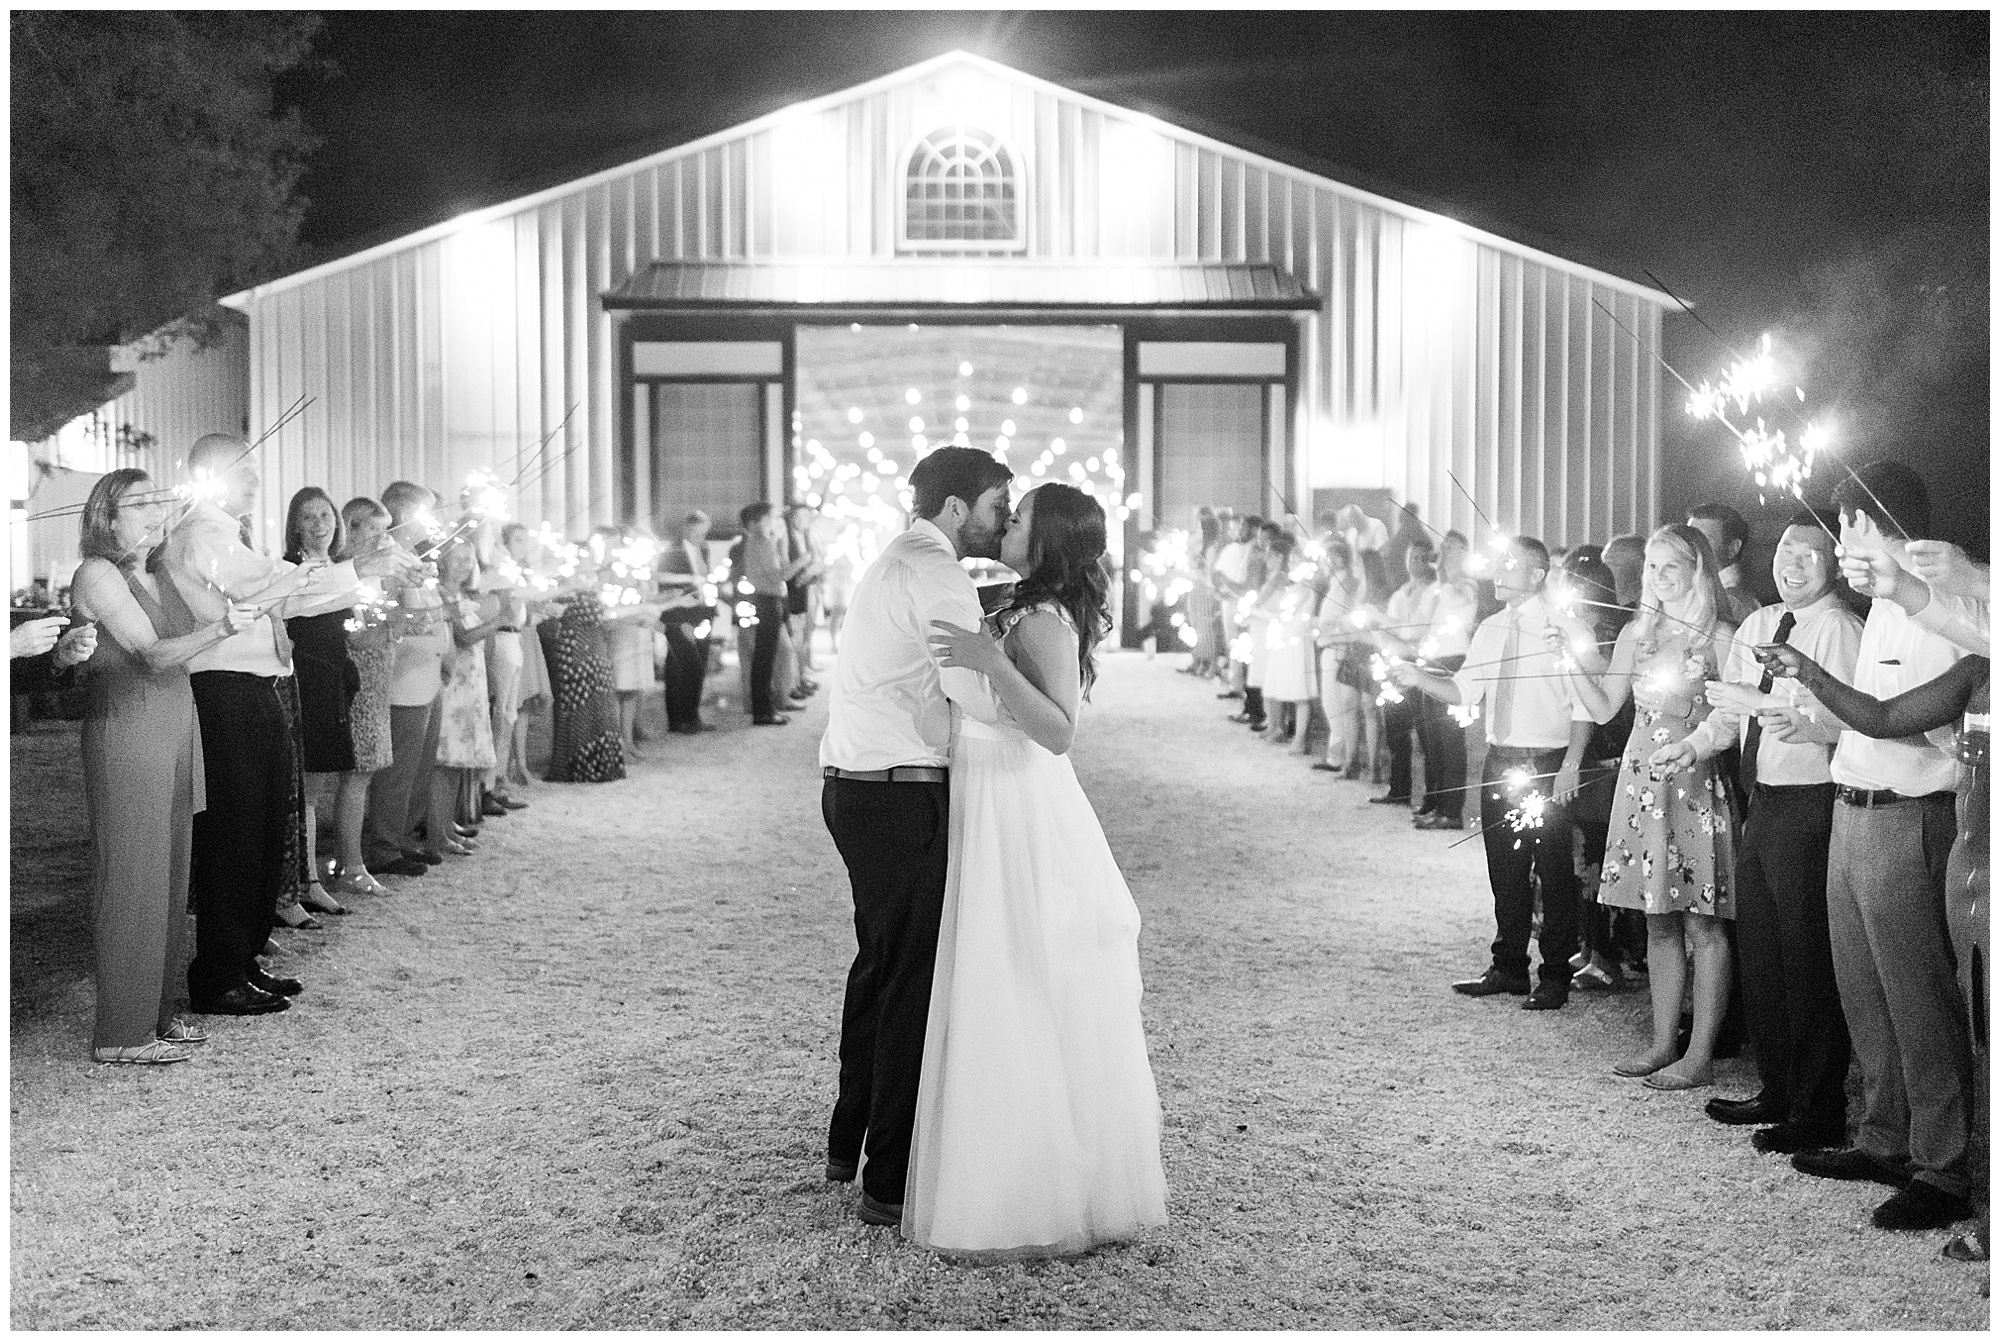 Kelley Stinson Photography,Hampton Roads Wedding Photographer,Virginia Beach Photographer,Culpepper Barn Wedding,